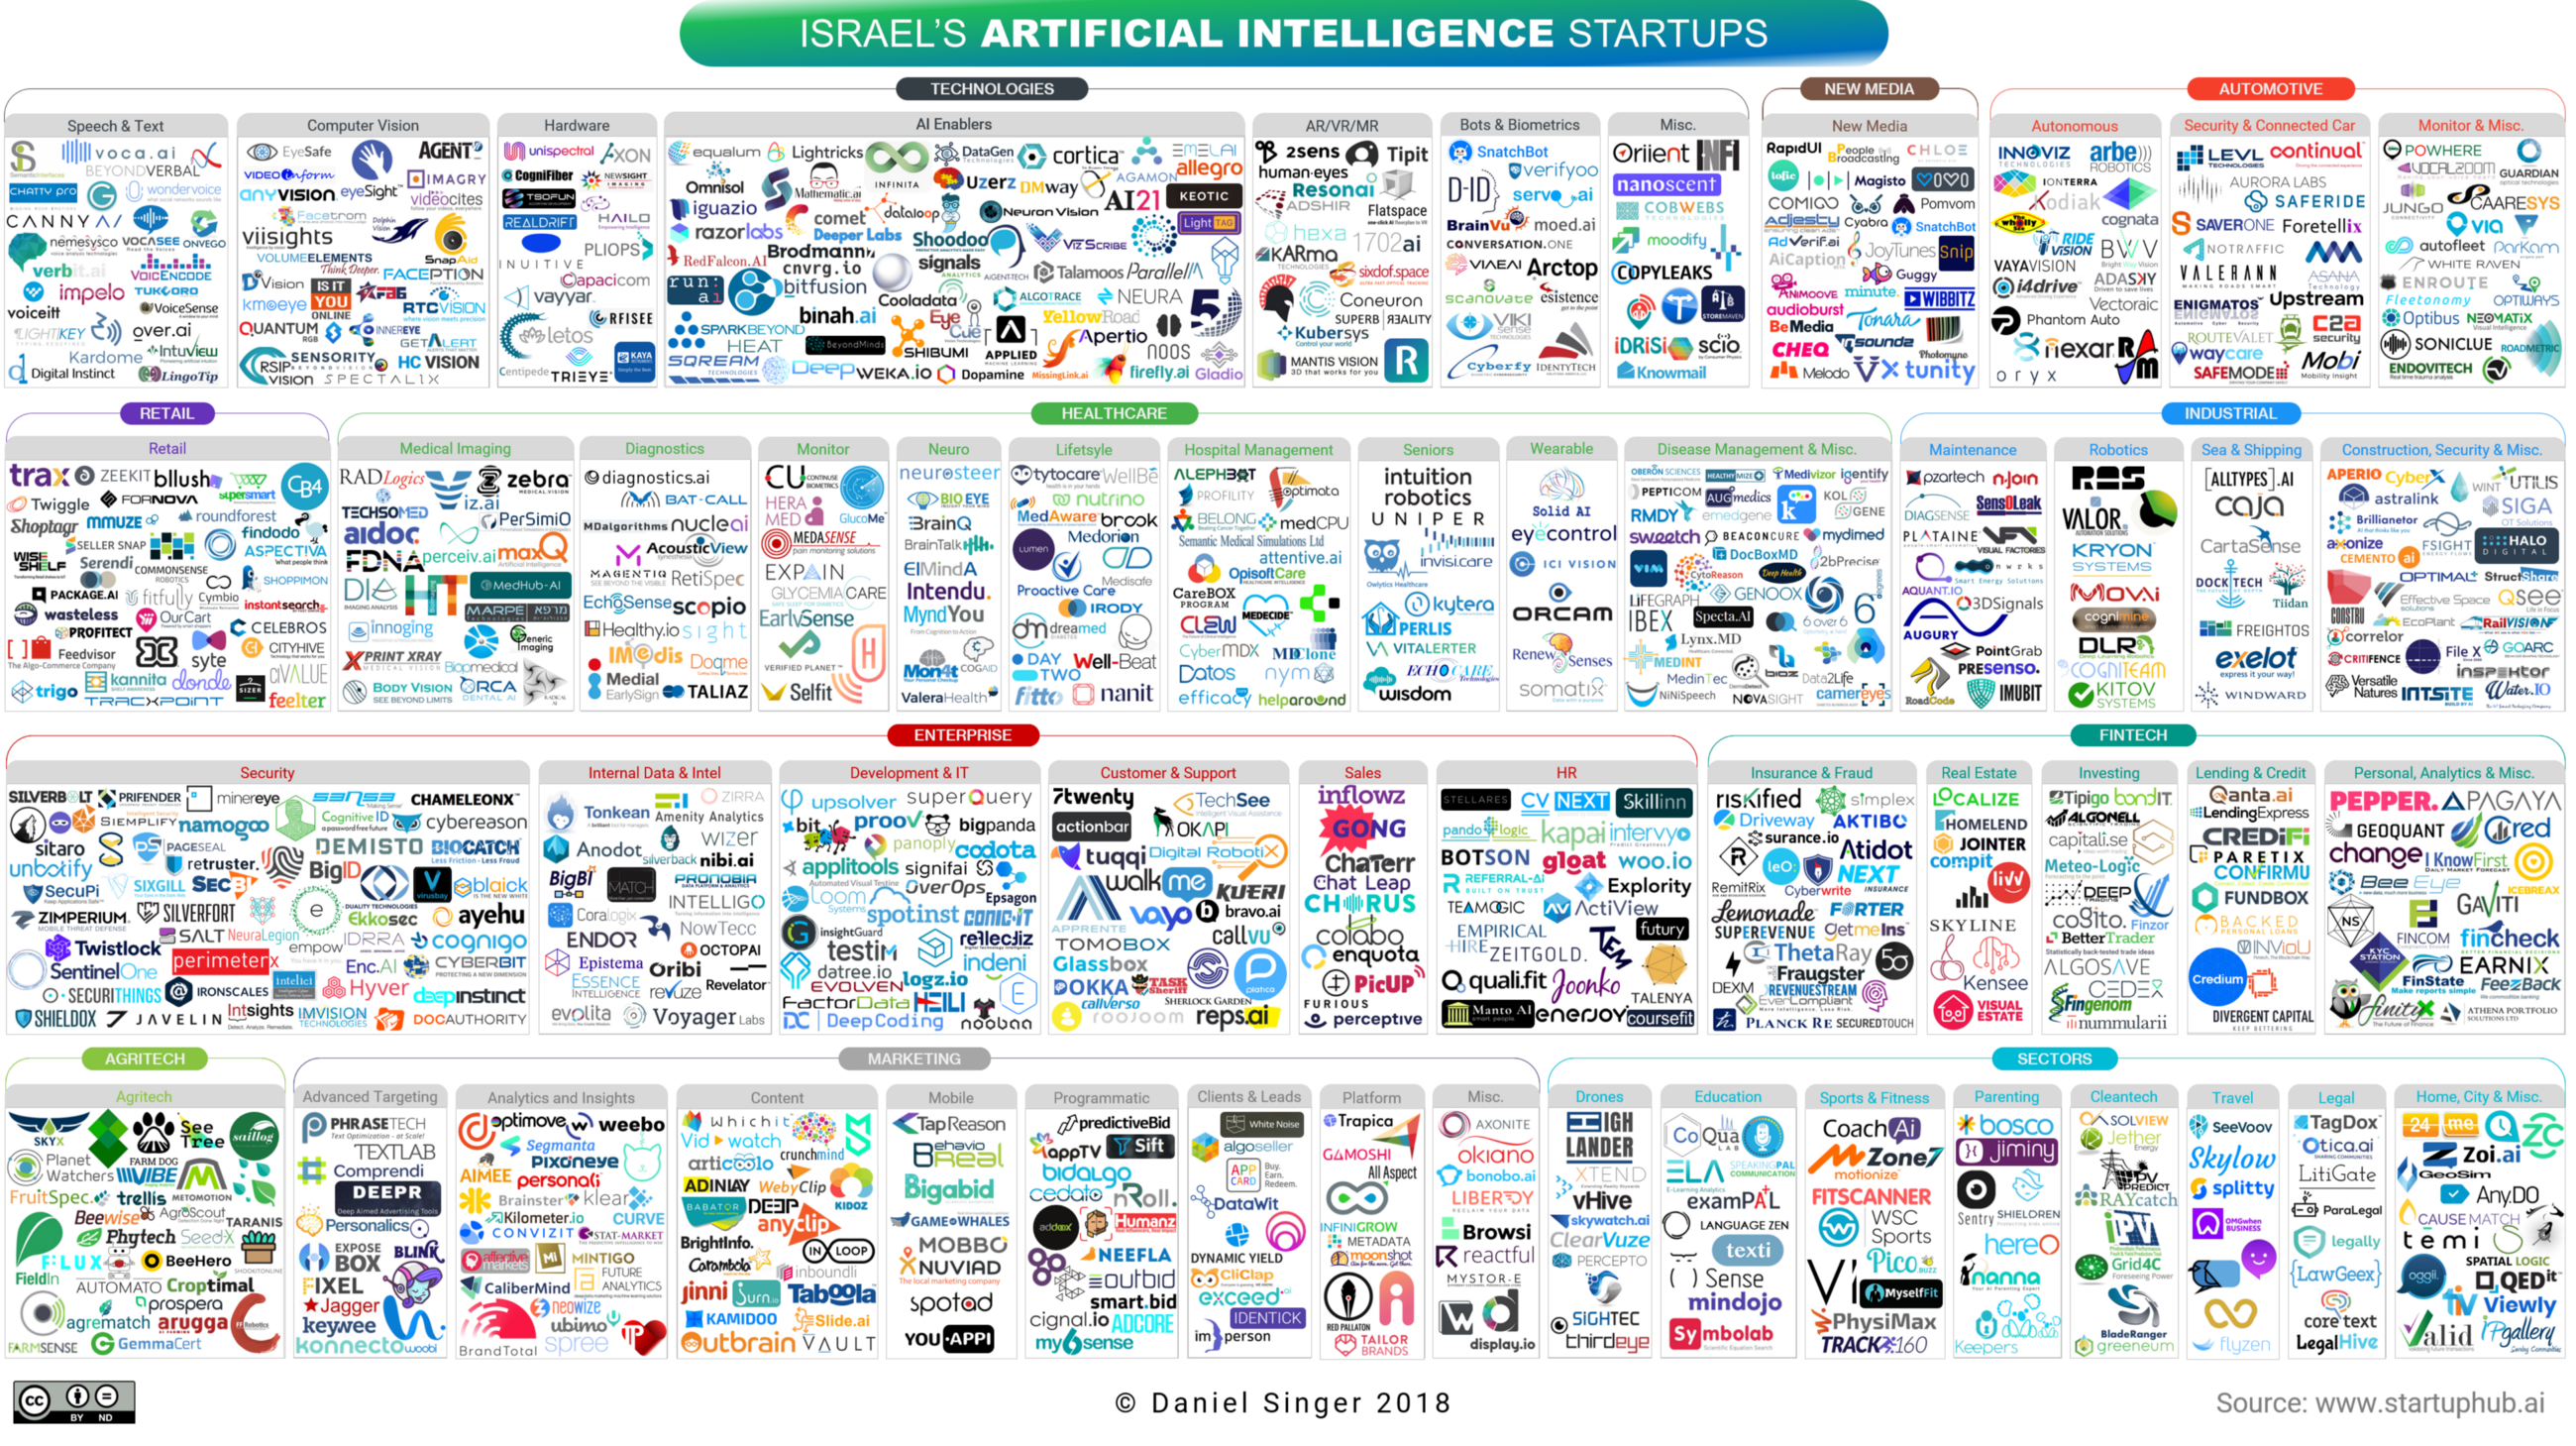 Israel AI Startup ecosystem